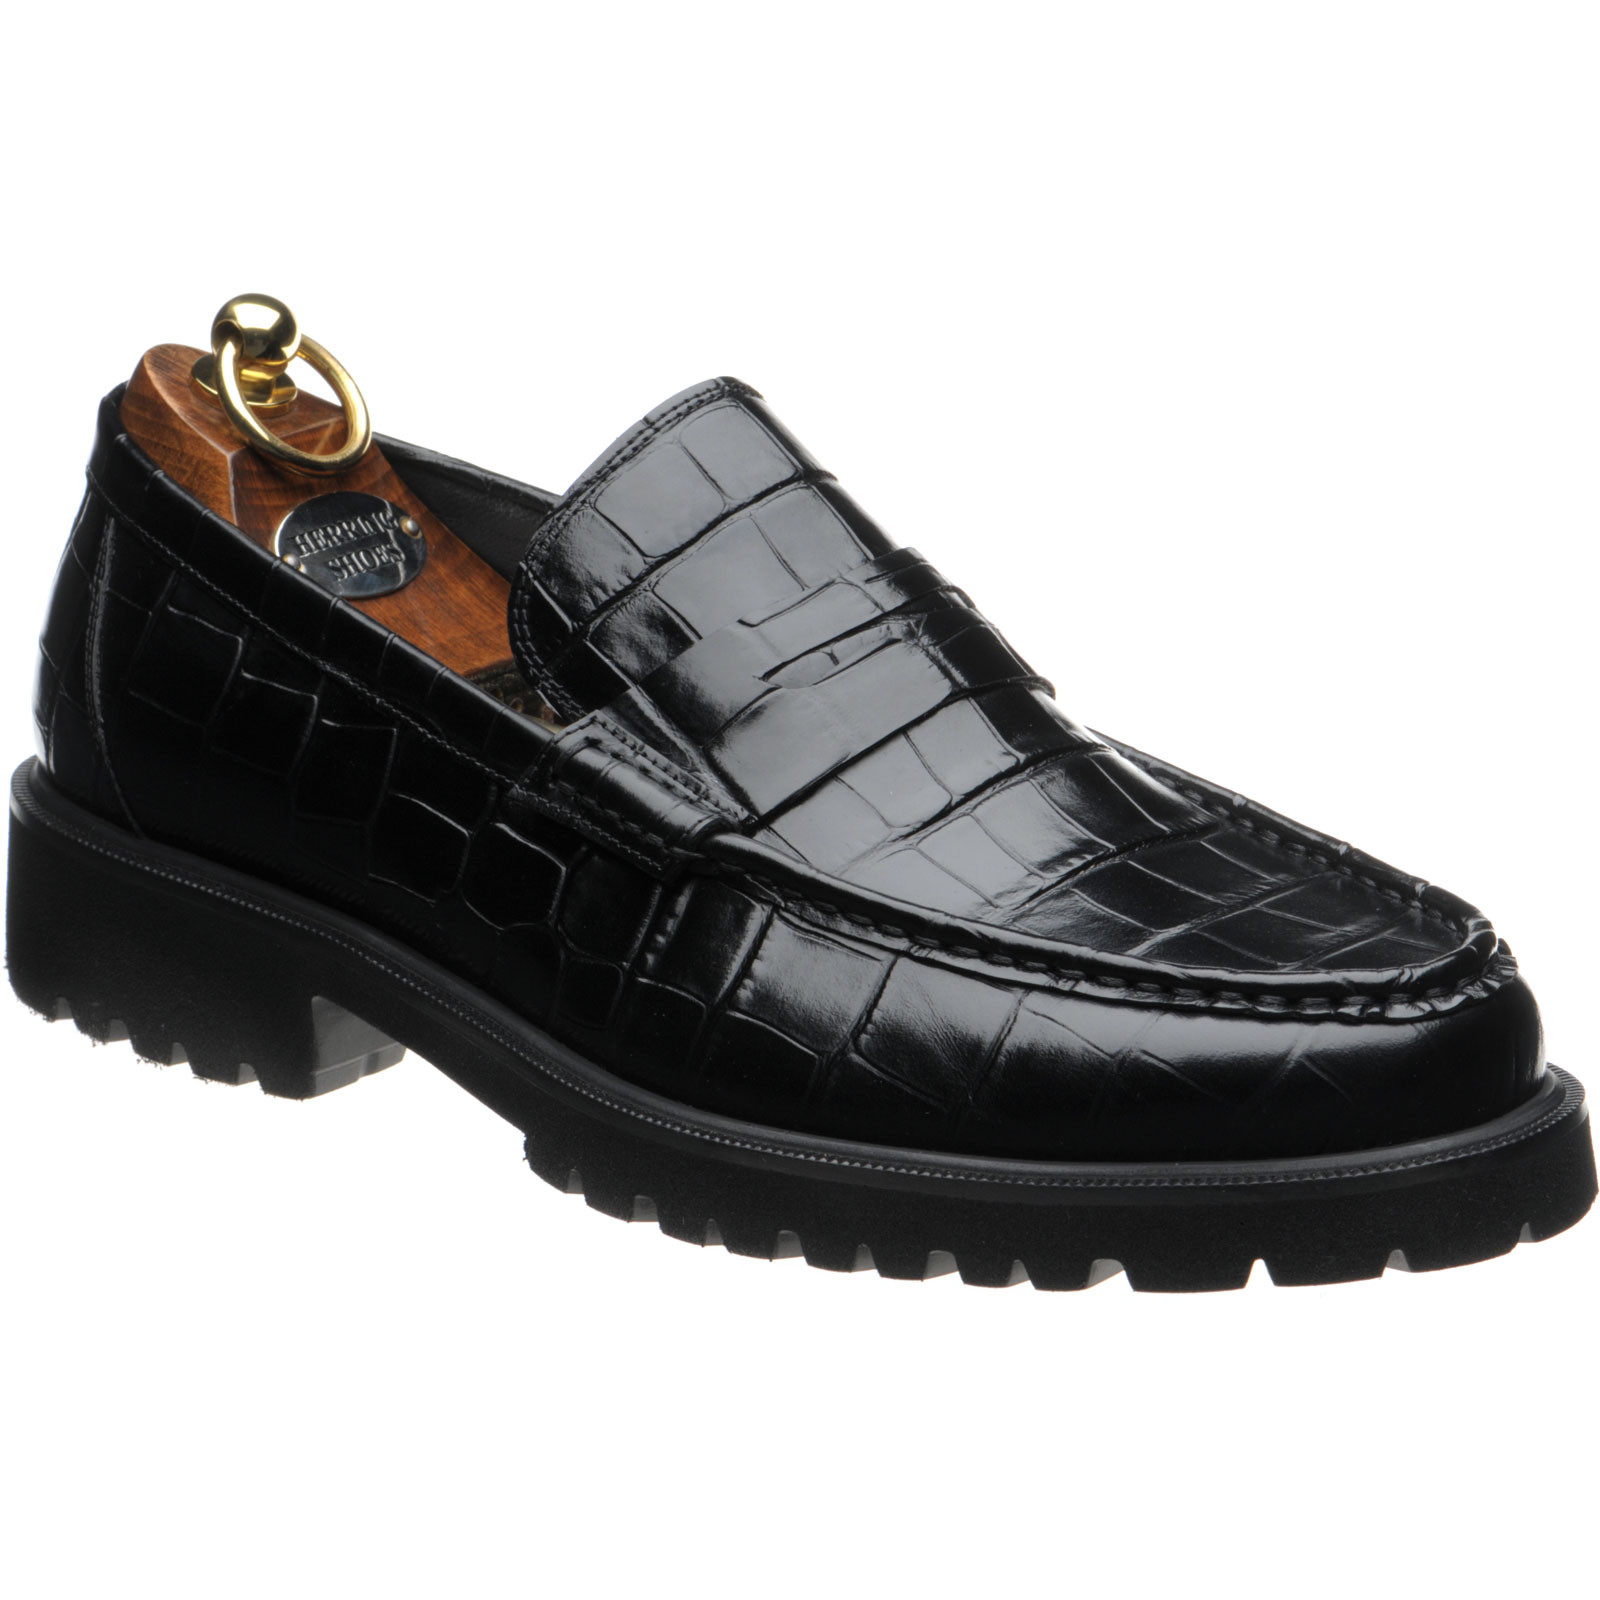 Herring shoes | Herring Classic | Kramer Mod in Black Croc at Herring Shoes